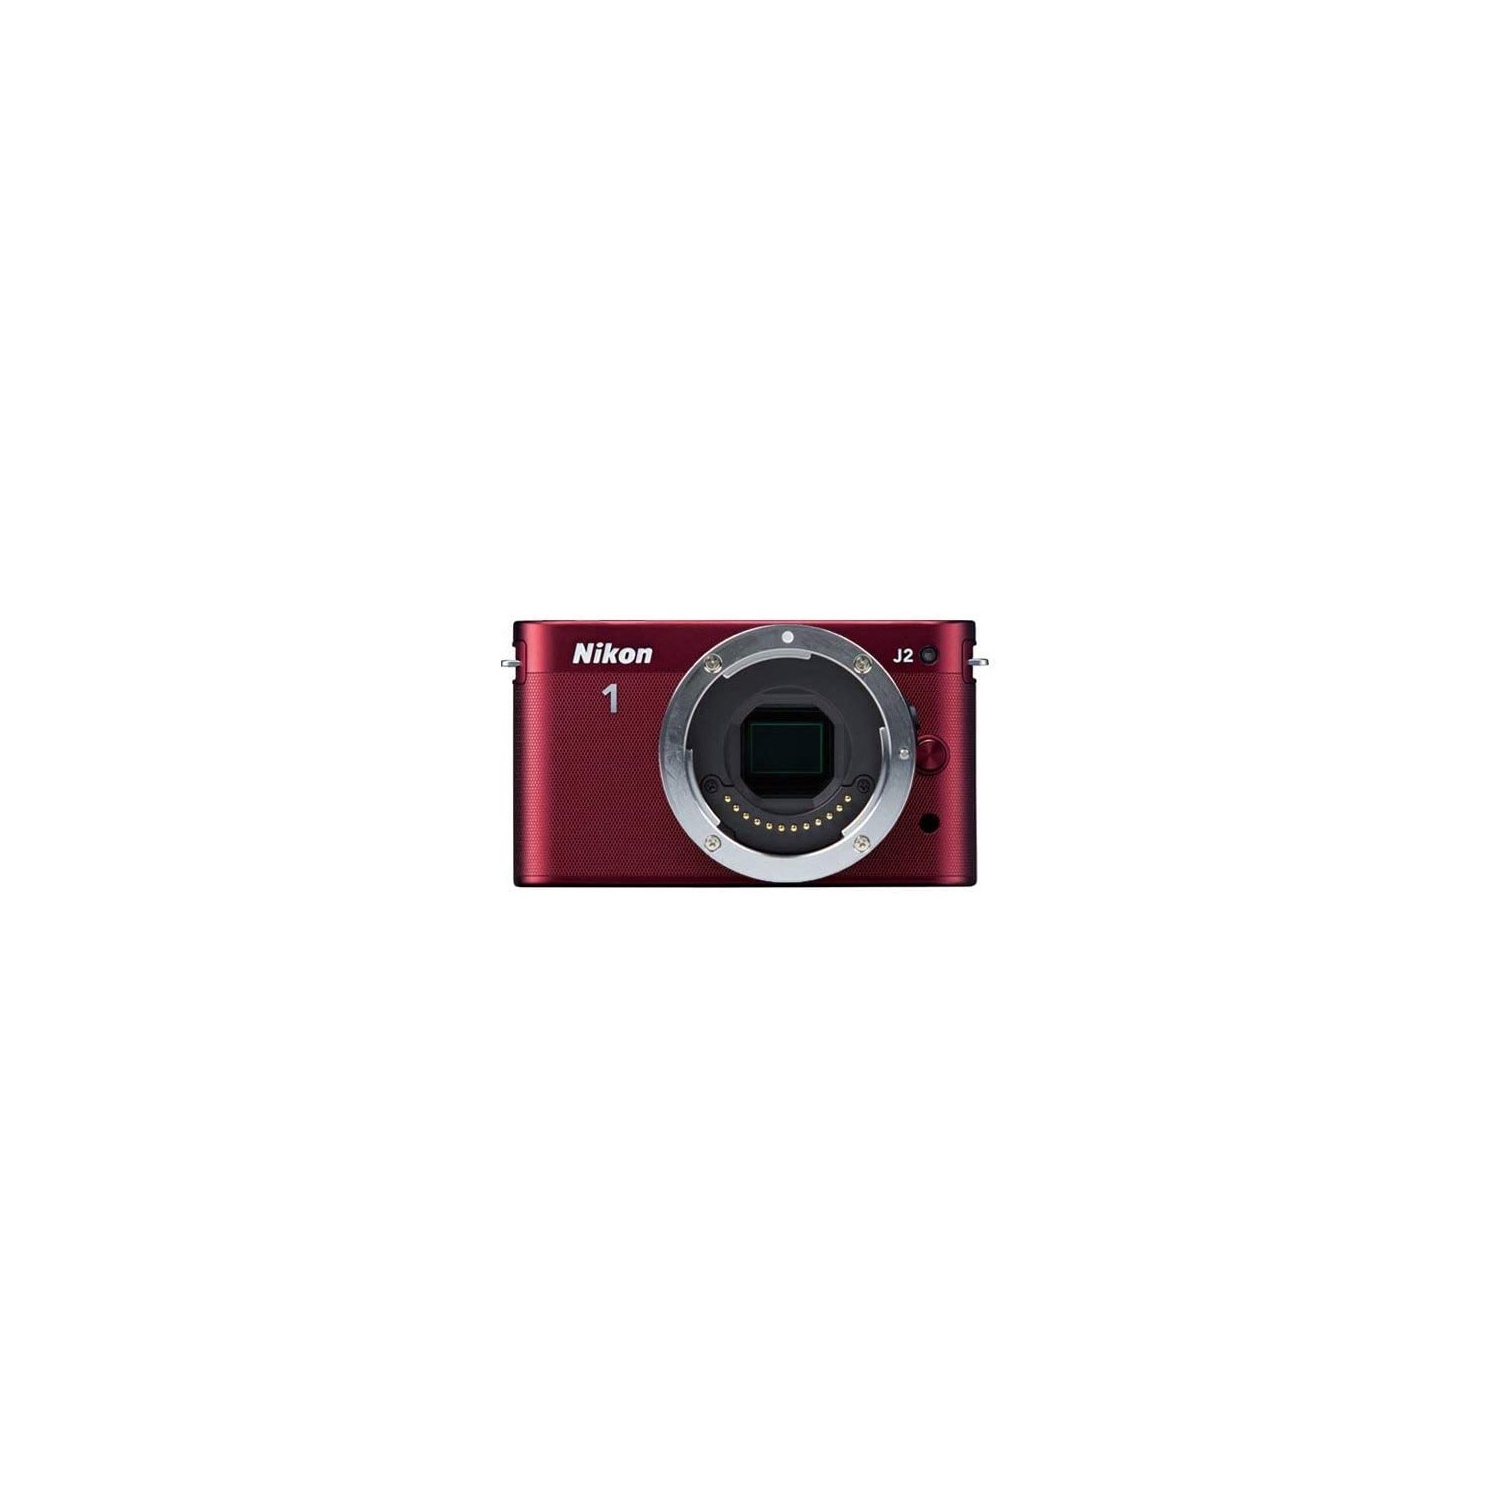 Nikon 1 J2 10.1 MP HD Digital Camera (Red) Body Only International Model